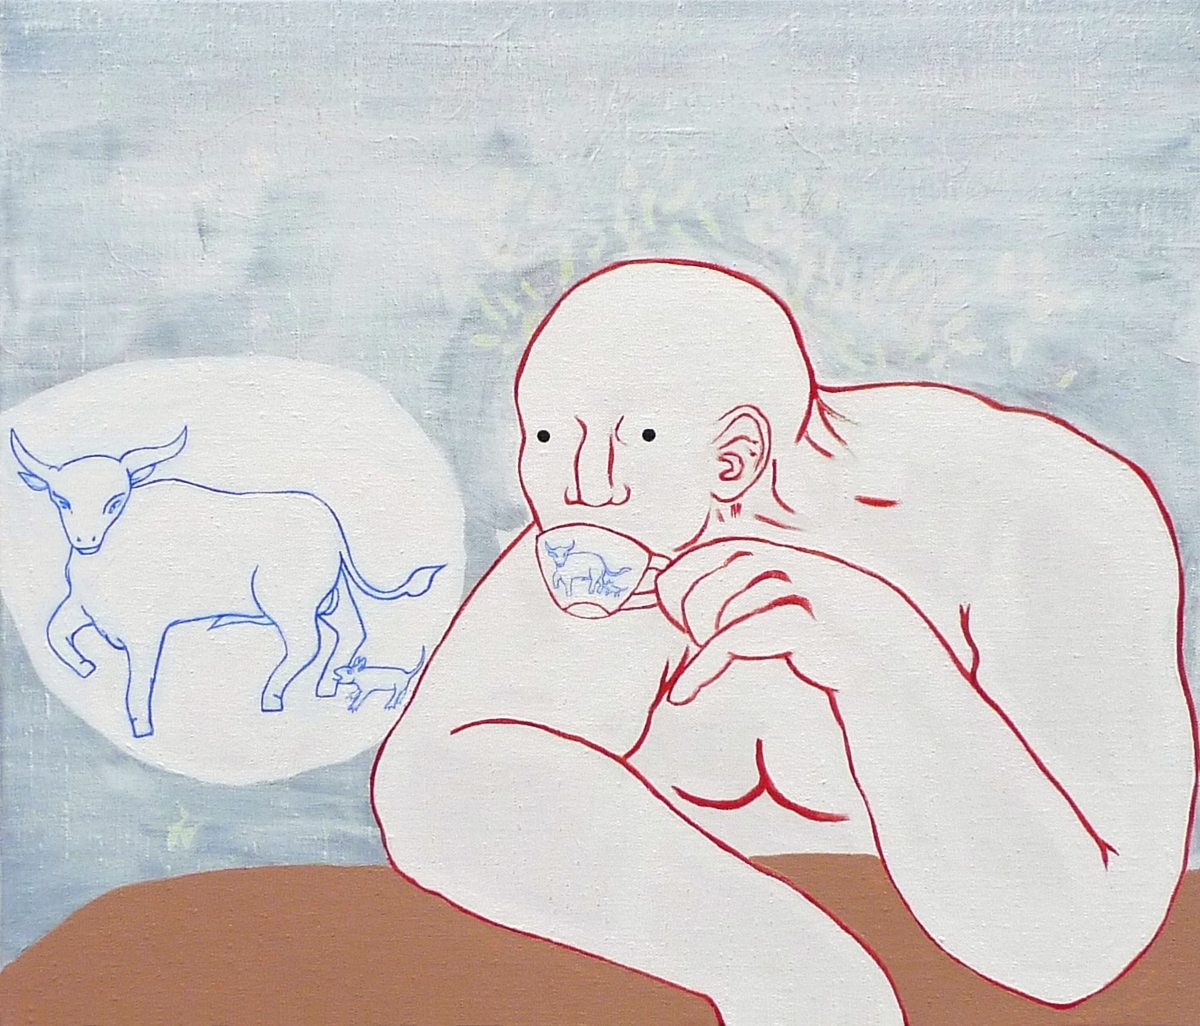 Jan Karpíšek: The Little Tea, acryl on canvas, 60x70 cm, 2009